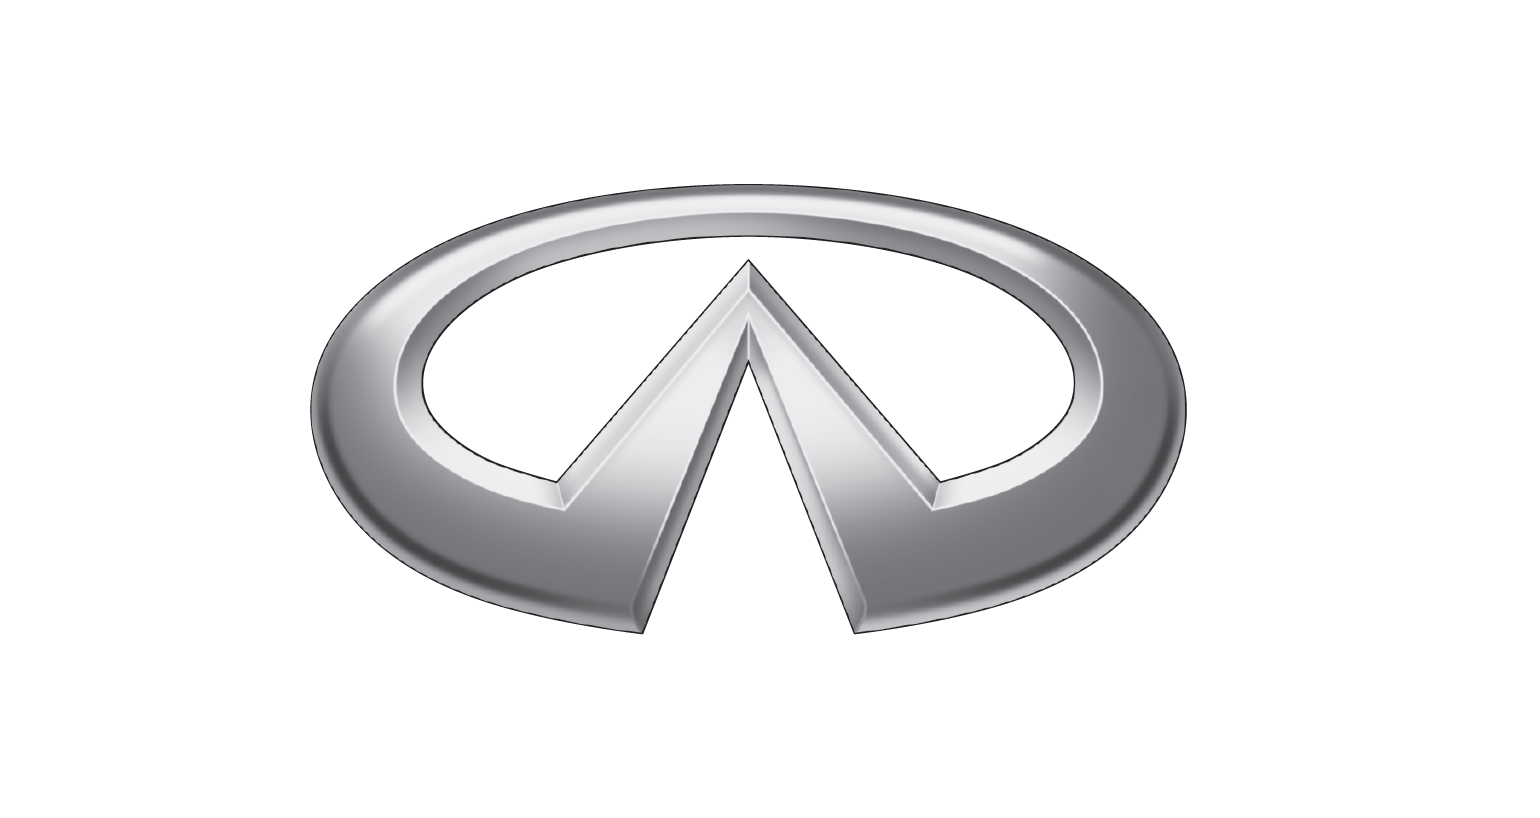 Upside Down Triangle Car Logo - Infiniti Logo, Infiniti Car Symbol Meaning and History | Car Brand ...